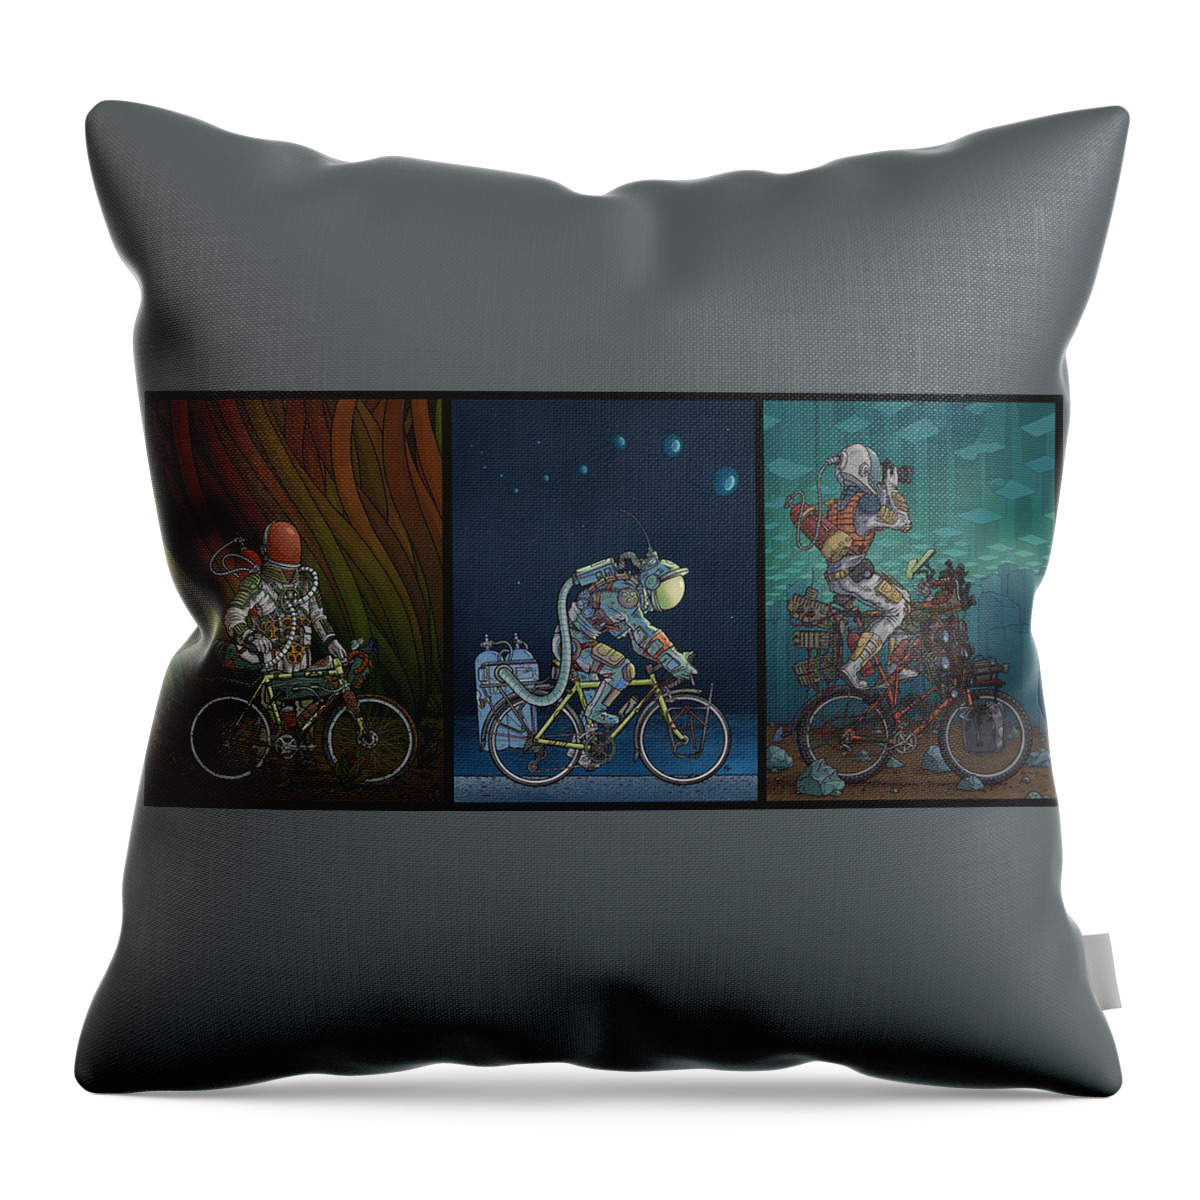 Bikes Throw Pillow featuring the photograph Bikestronaut Triptych by EvanArt - Evan Miller